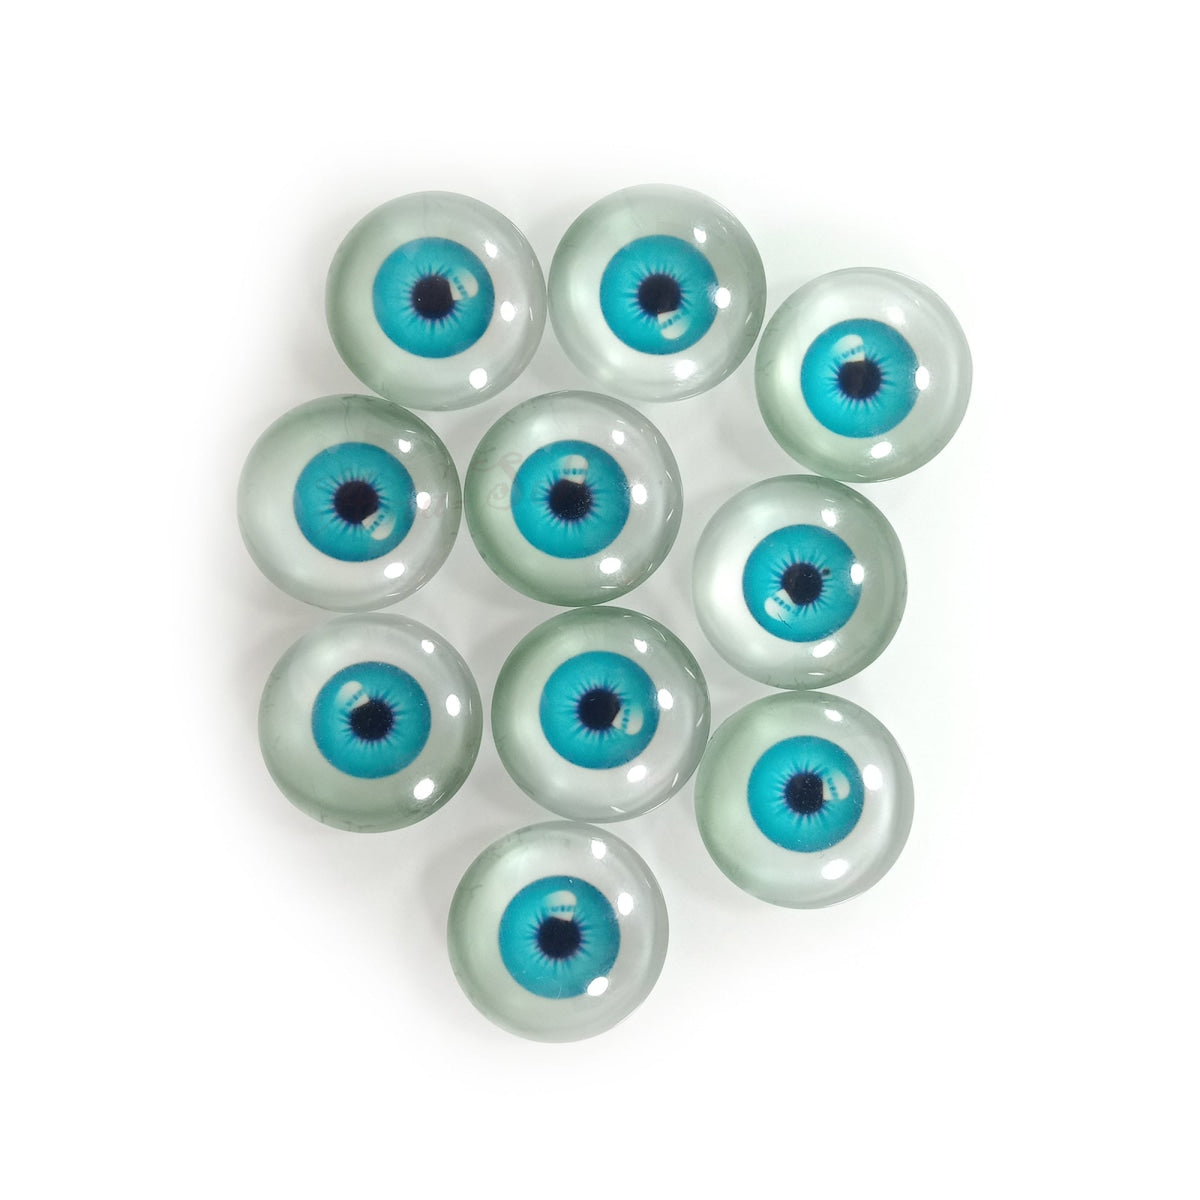 6mm 8mm 10mm 20mm Dolls Glass Human Eyes DIY Eyes Animal Dome Cabochons Flatback